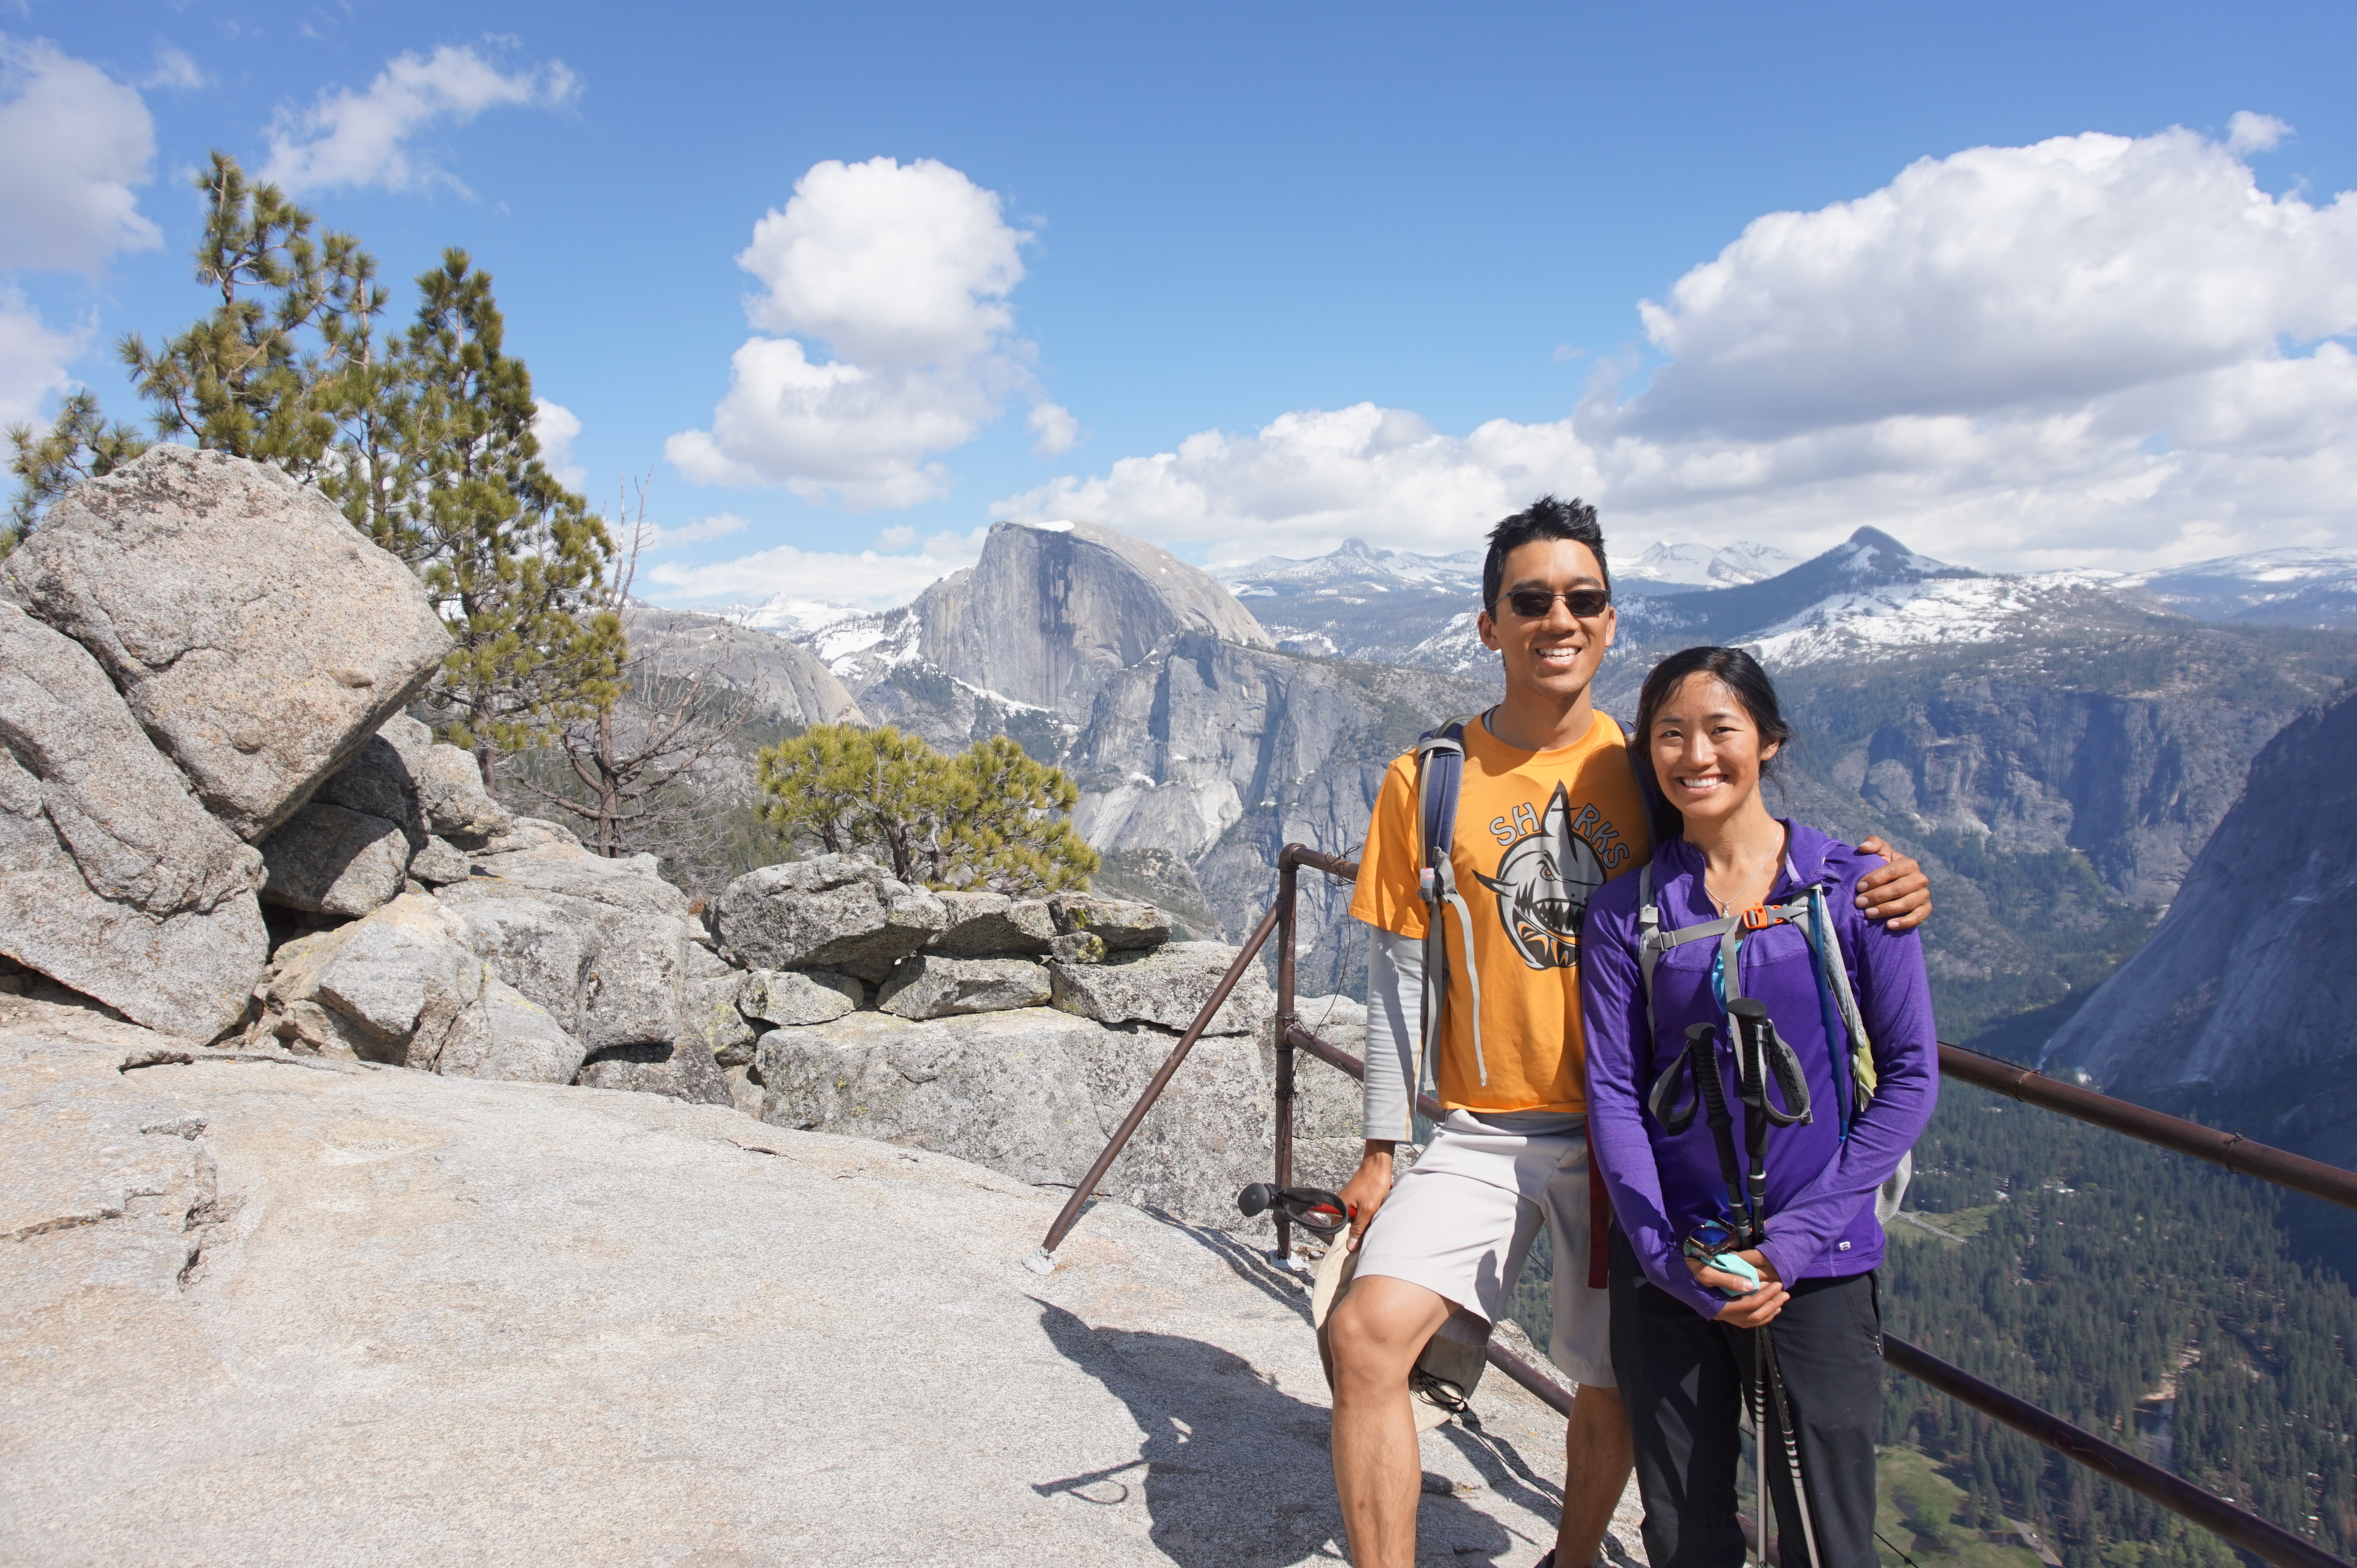 Us at Yosemite Point, above Yosemite Falls.